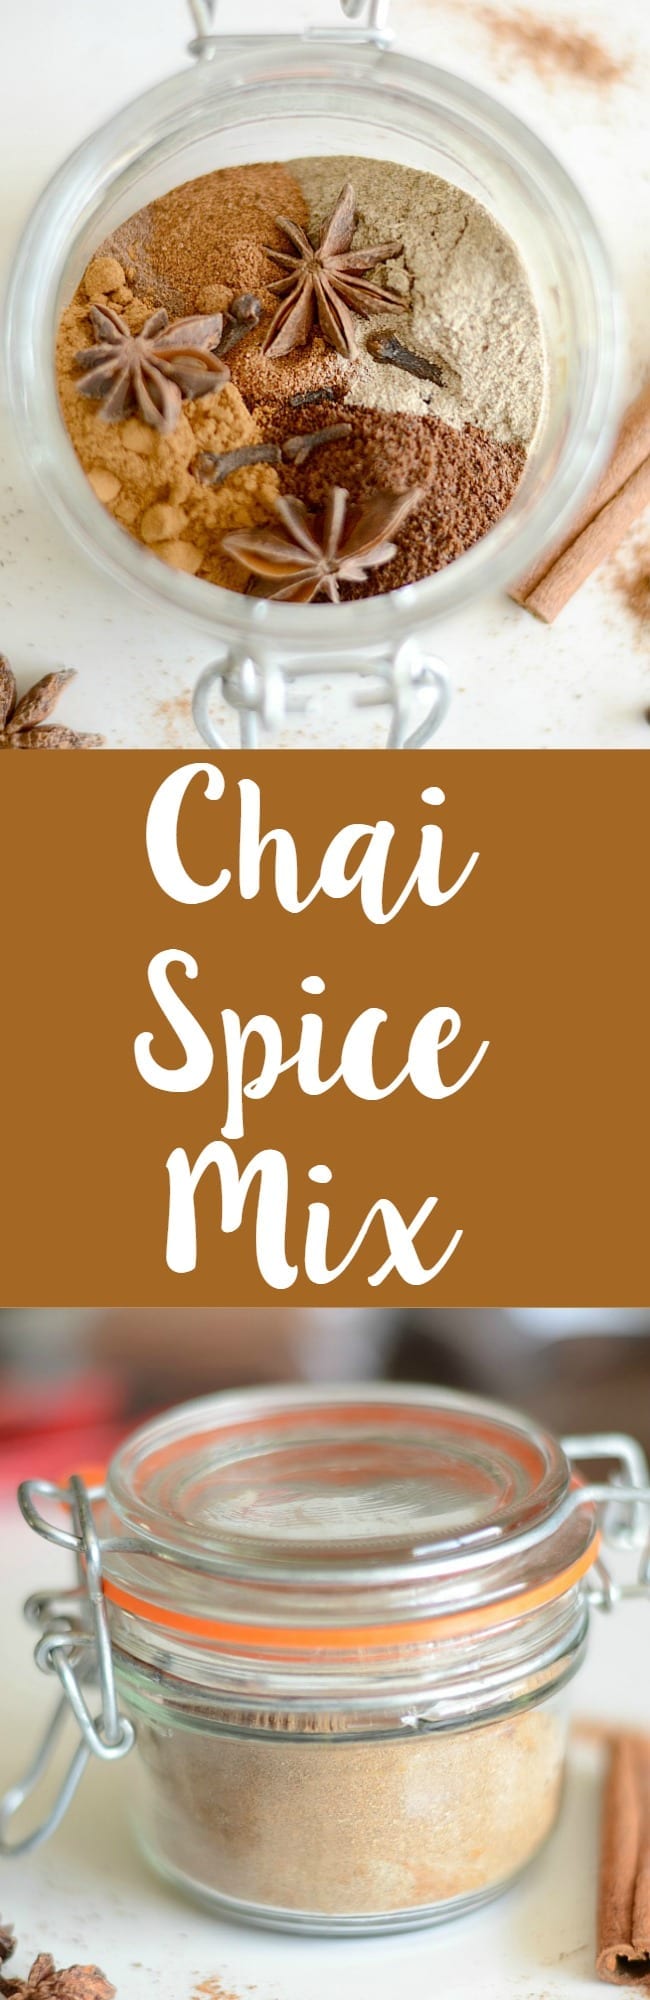 Chai spice mix